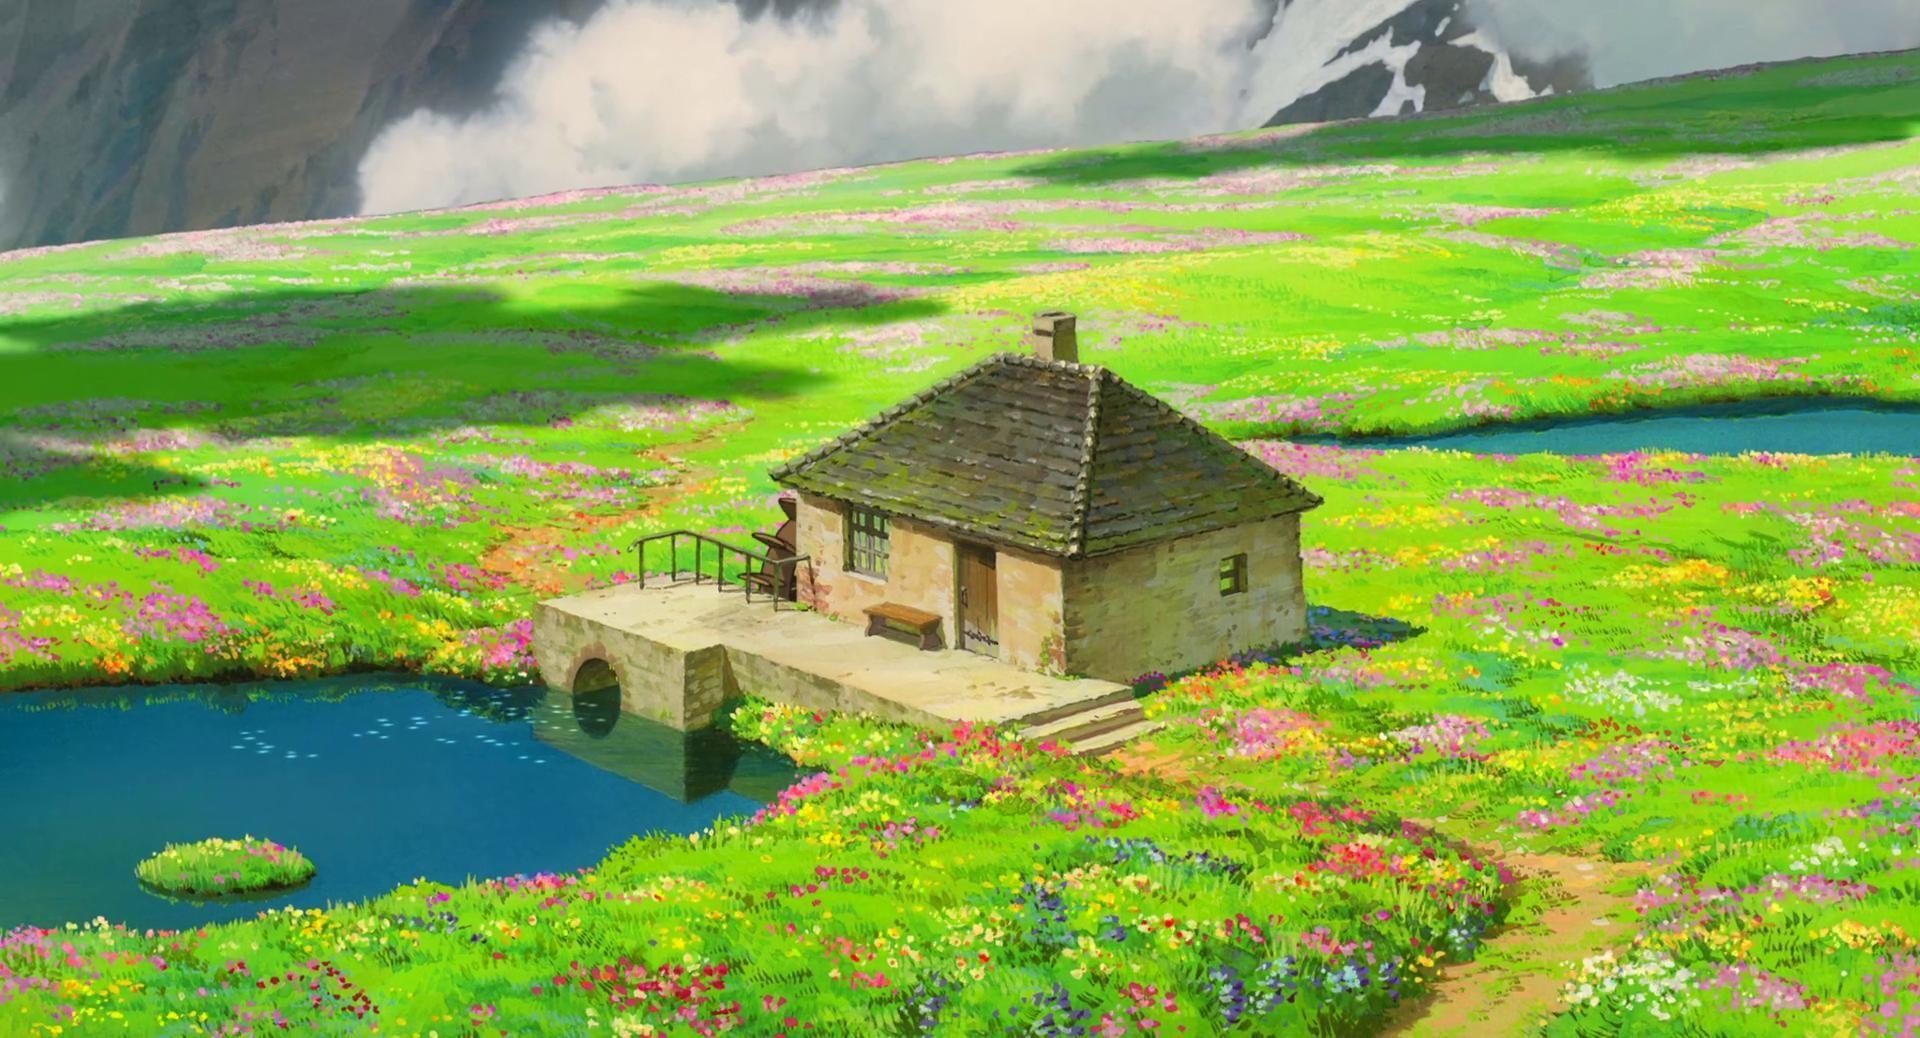 Studio Ghibli Scenery Wallpapers - Top Free Studio Ghibli Scenery